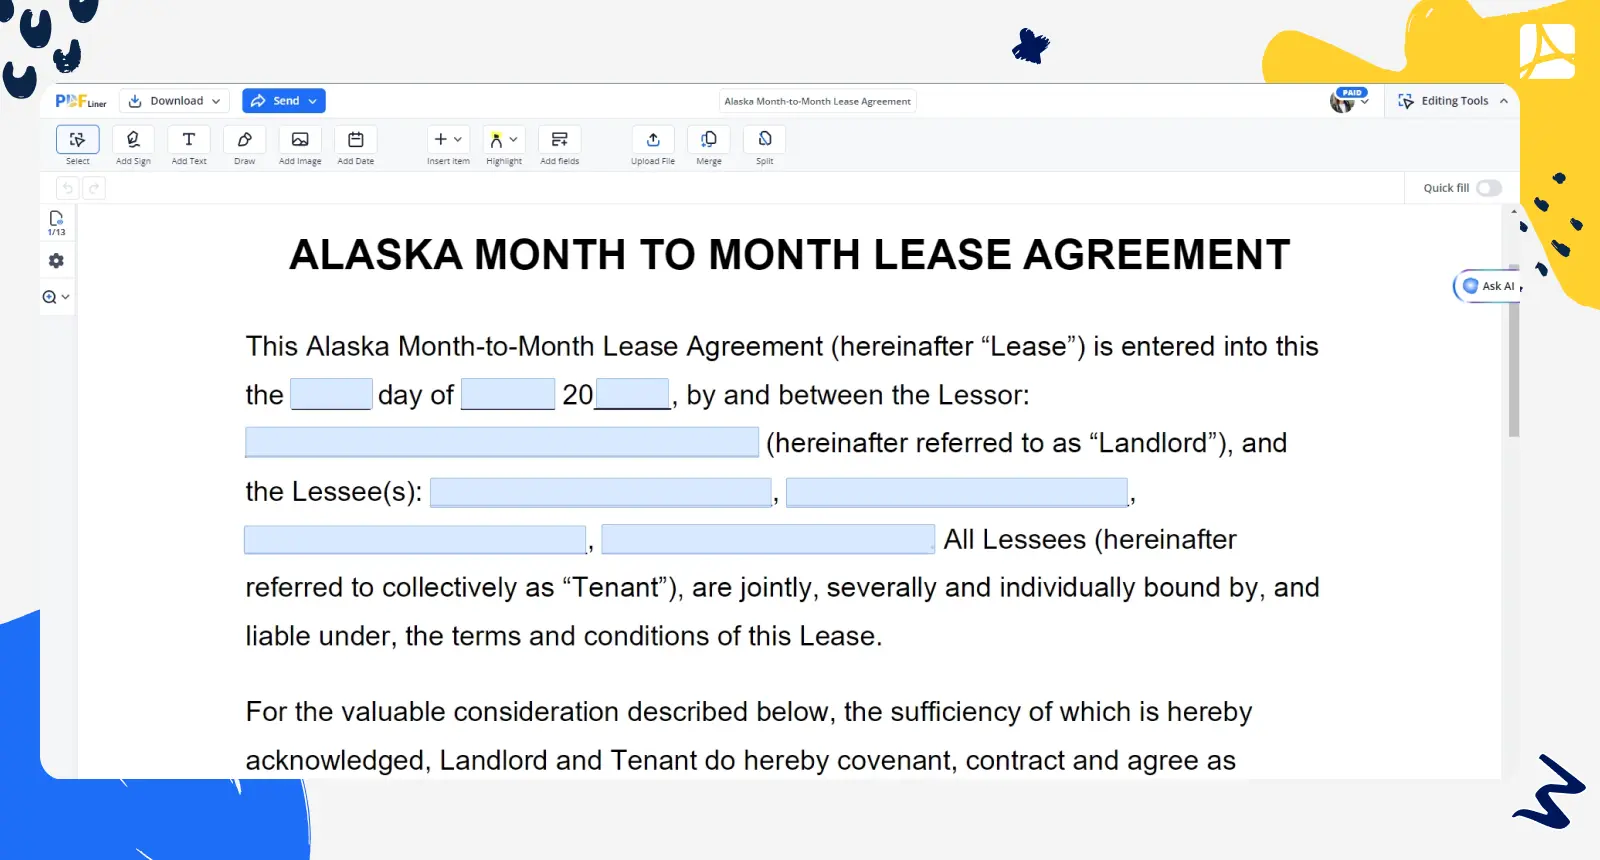 Alaska Month-to-Month Lease Agreement PDFLiner screenshot